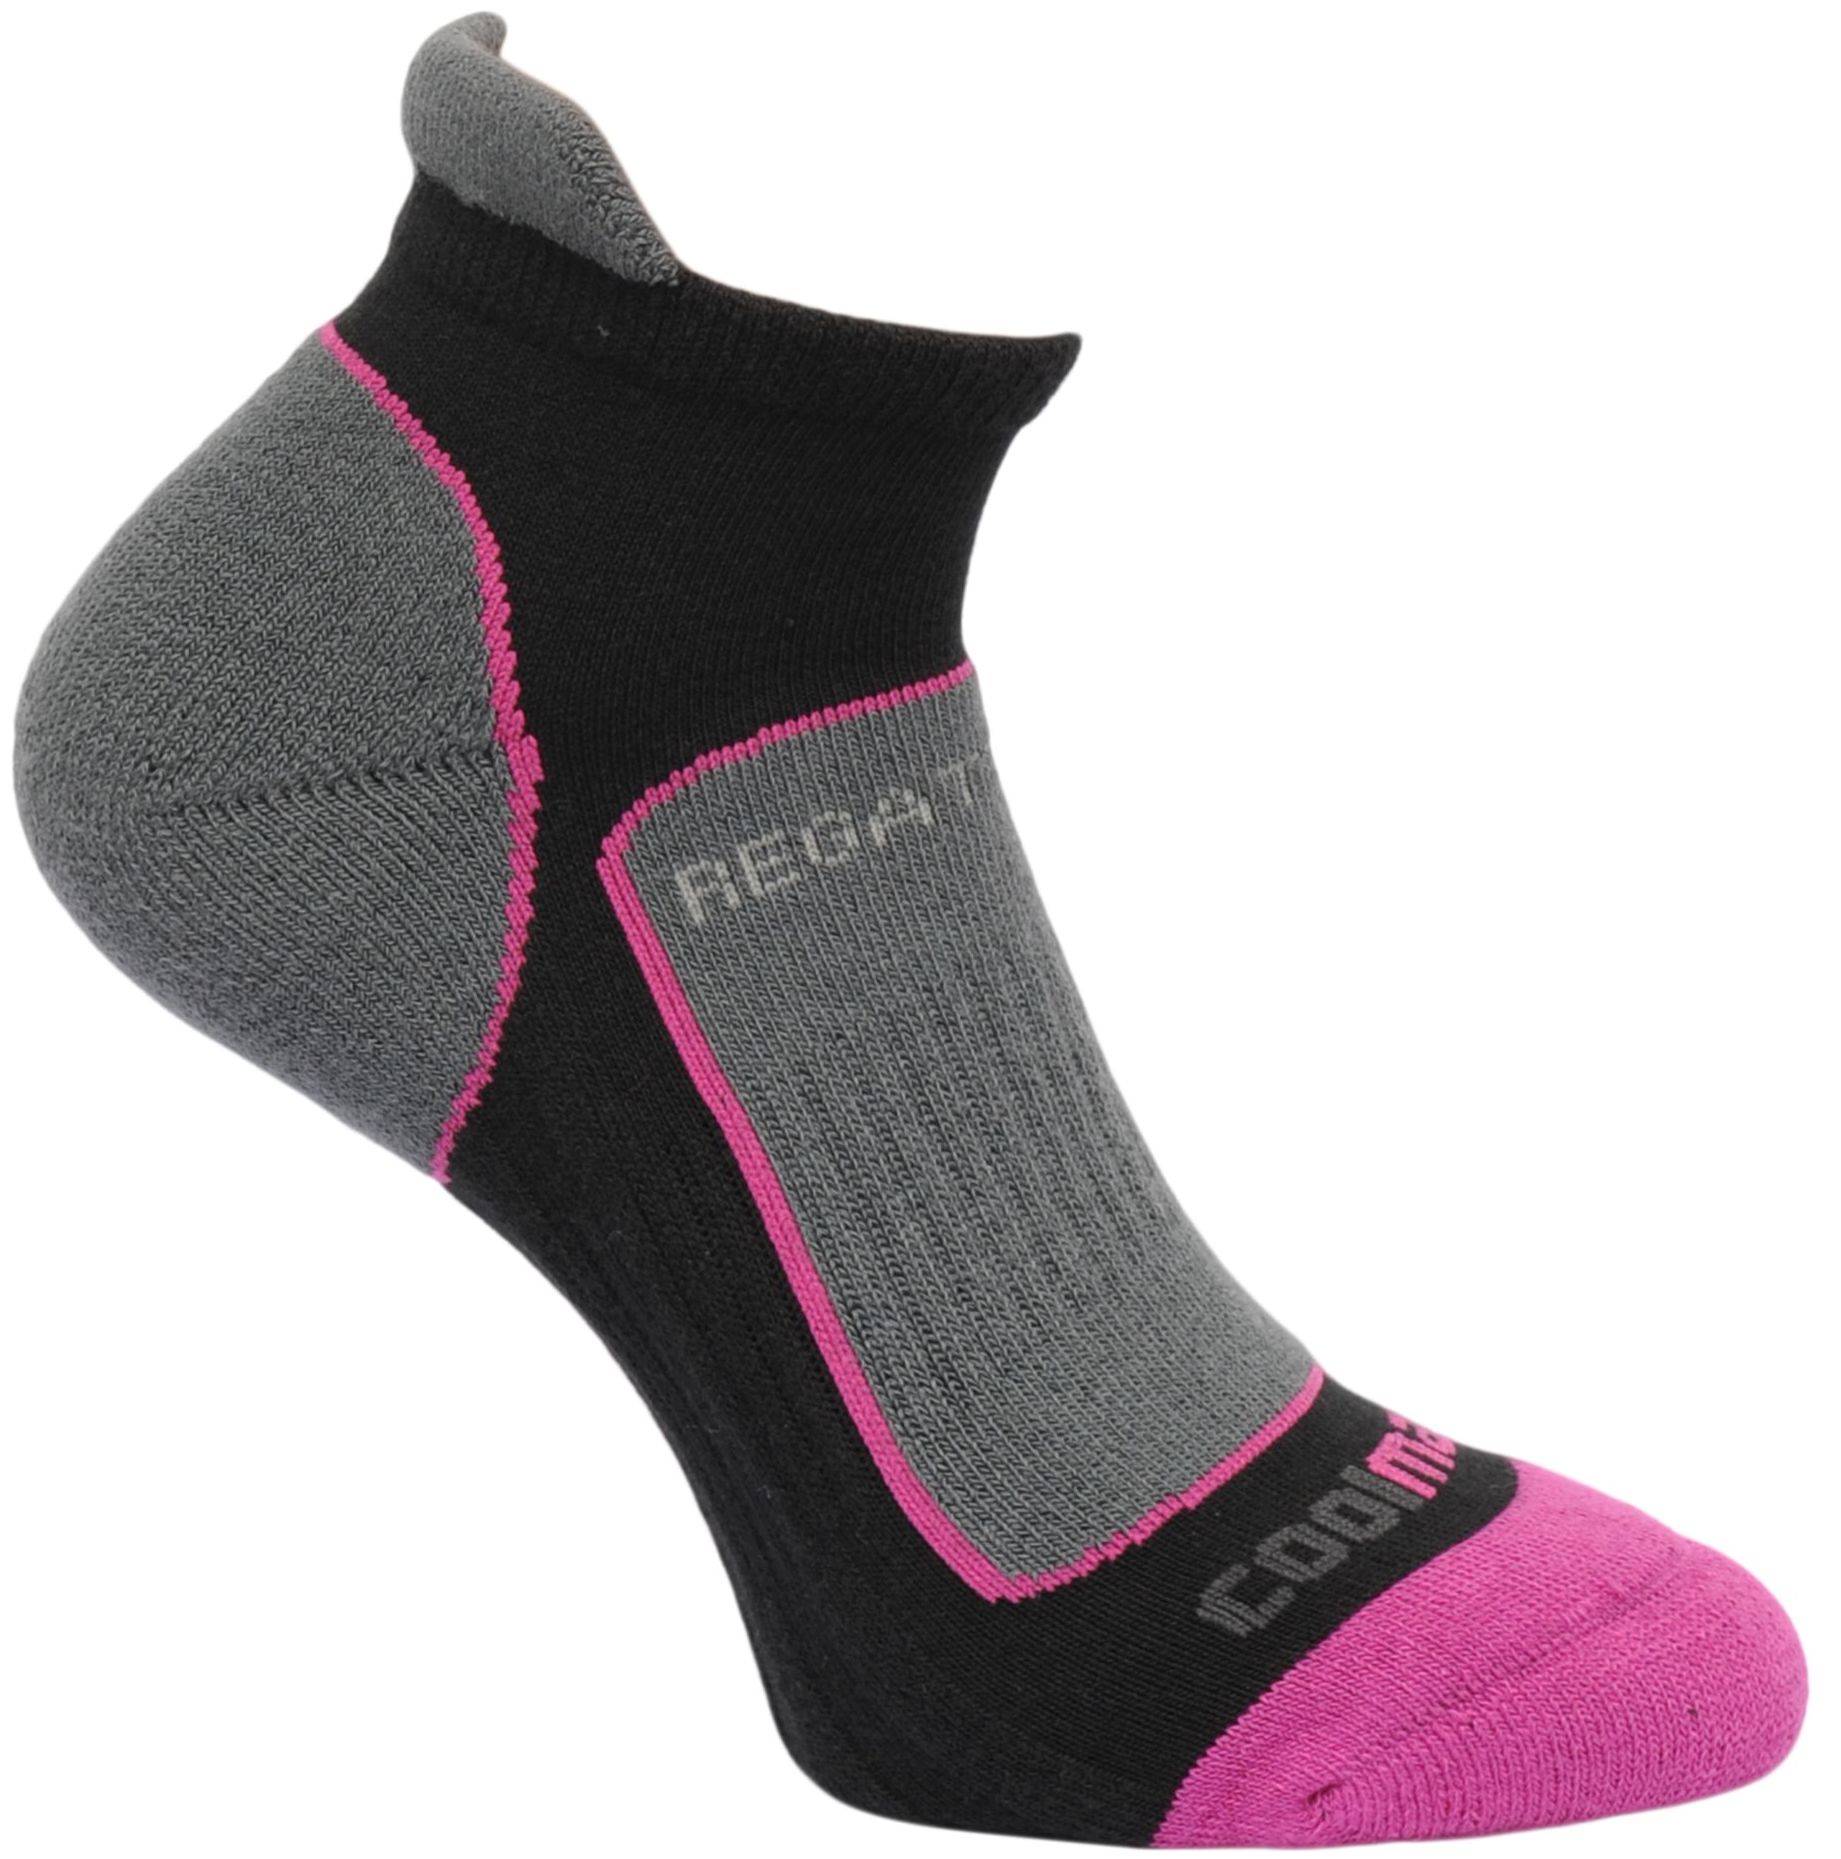 Regatta Wmns Trail Runner Socks Black/Vivid Viola Size 6-8